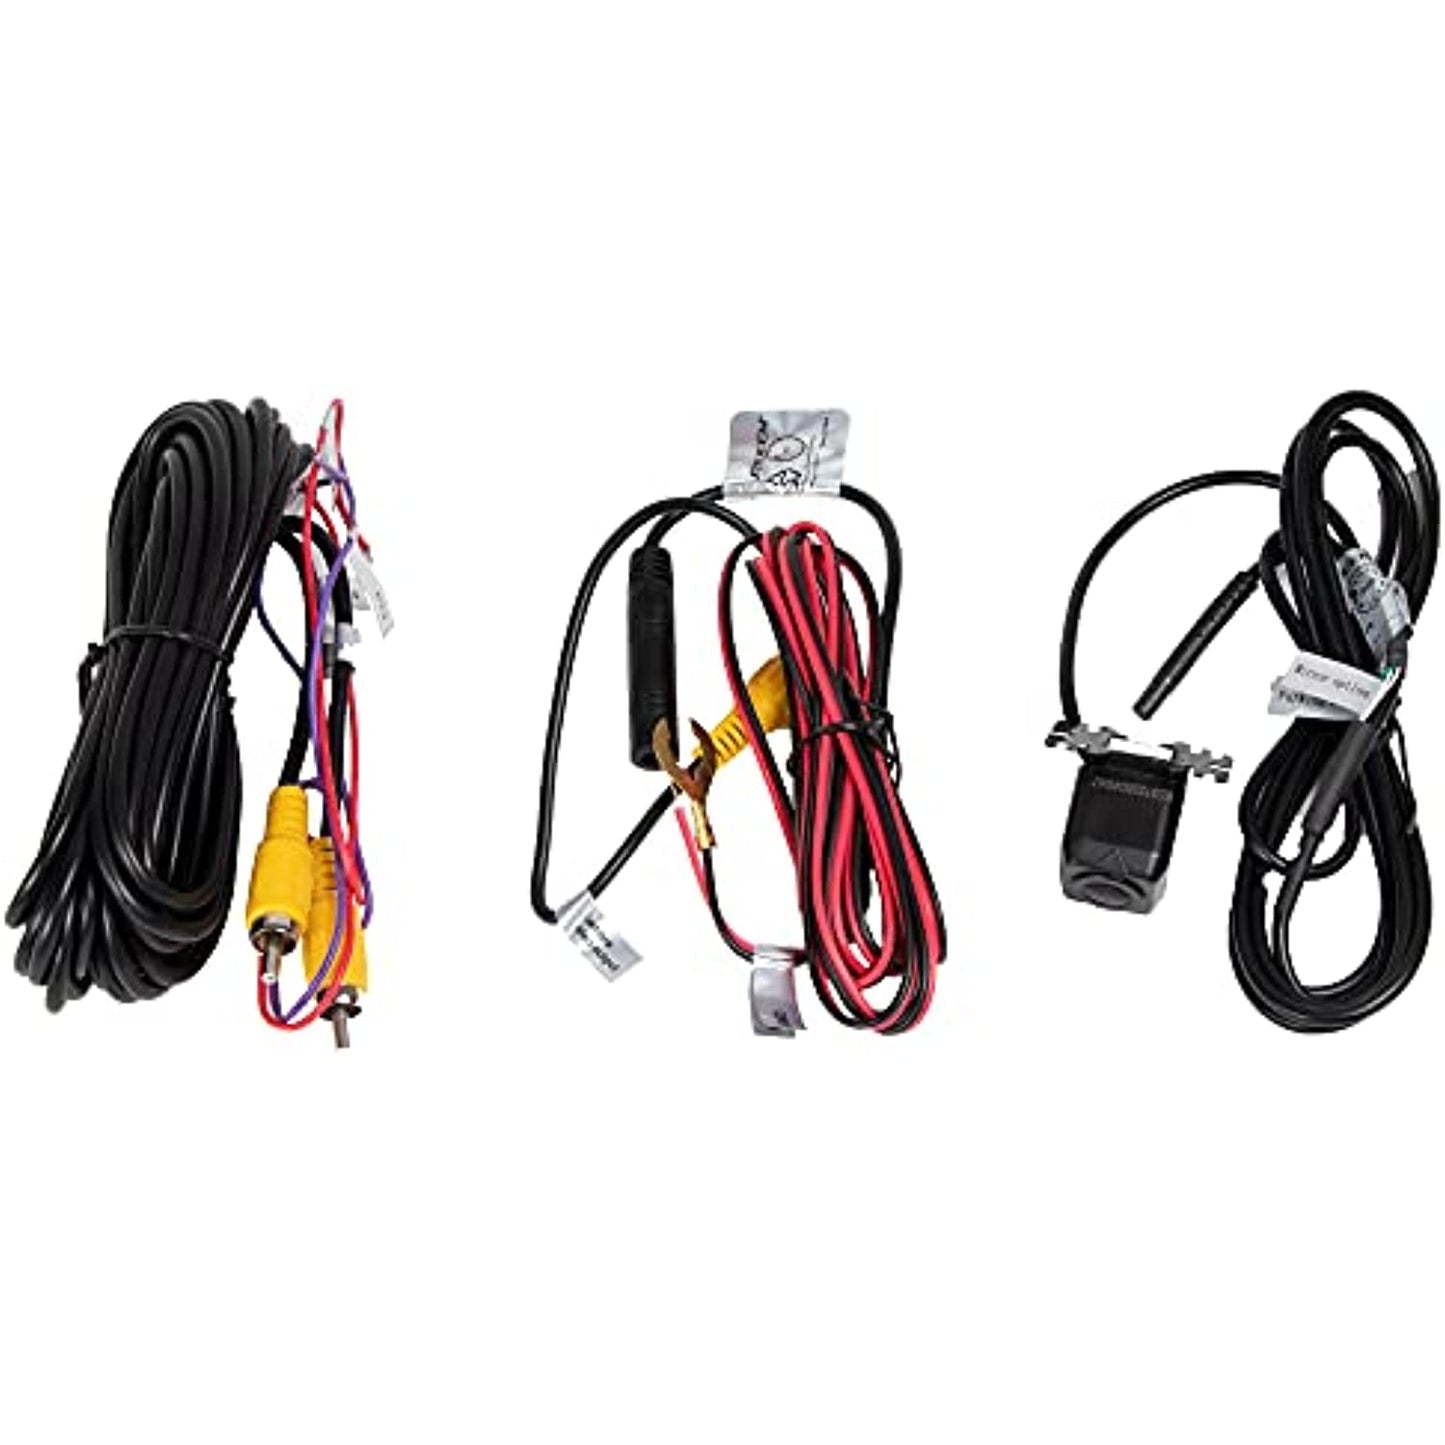 RYDEEN JB01 Wire Harness for Accessory Power + cm-MINy3 Backup Camera